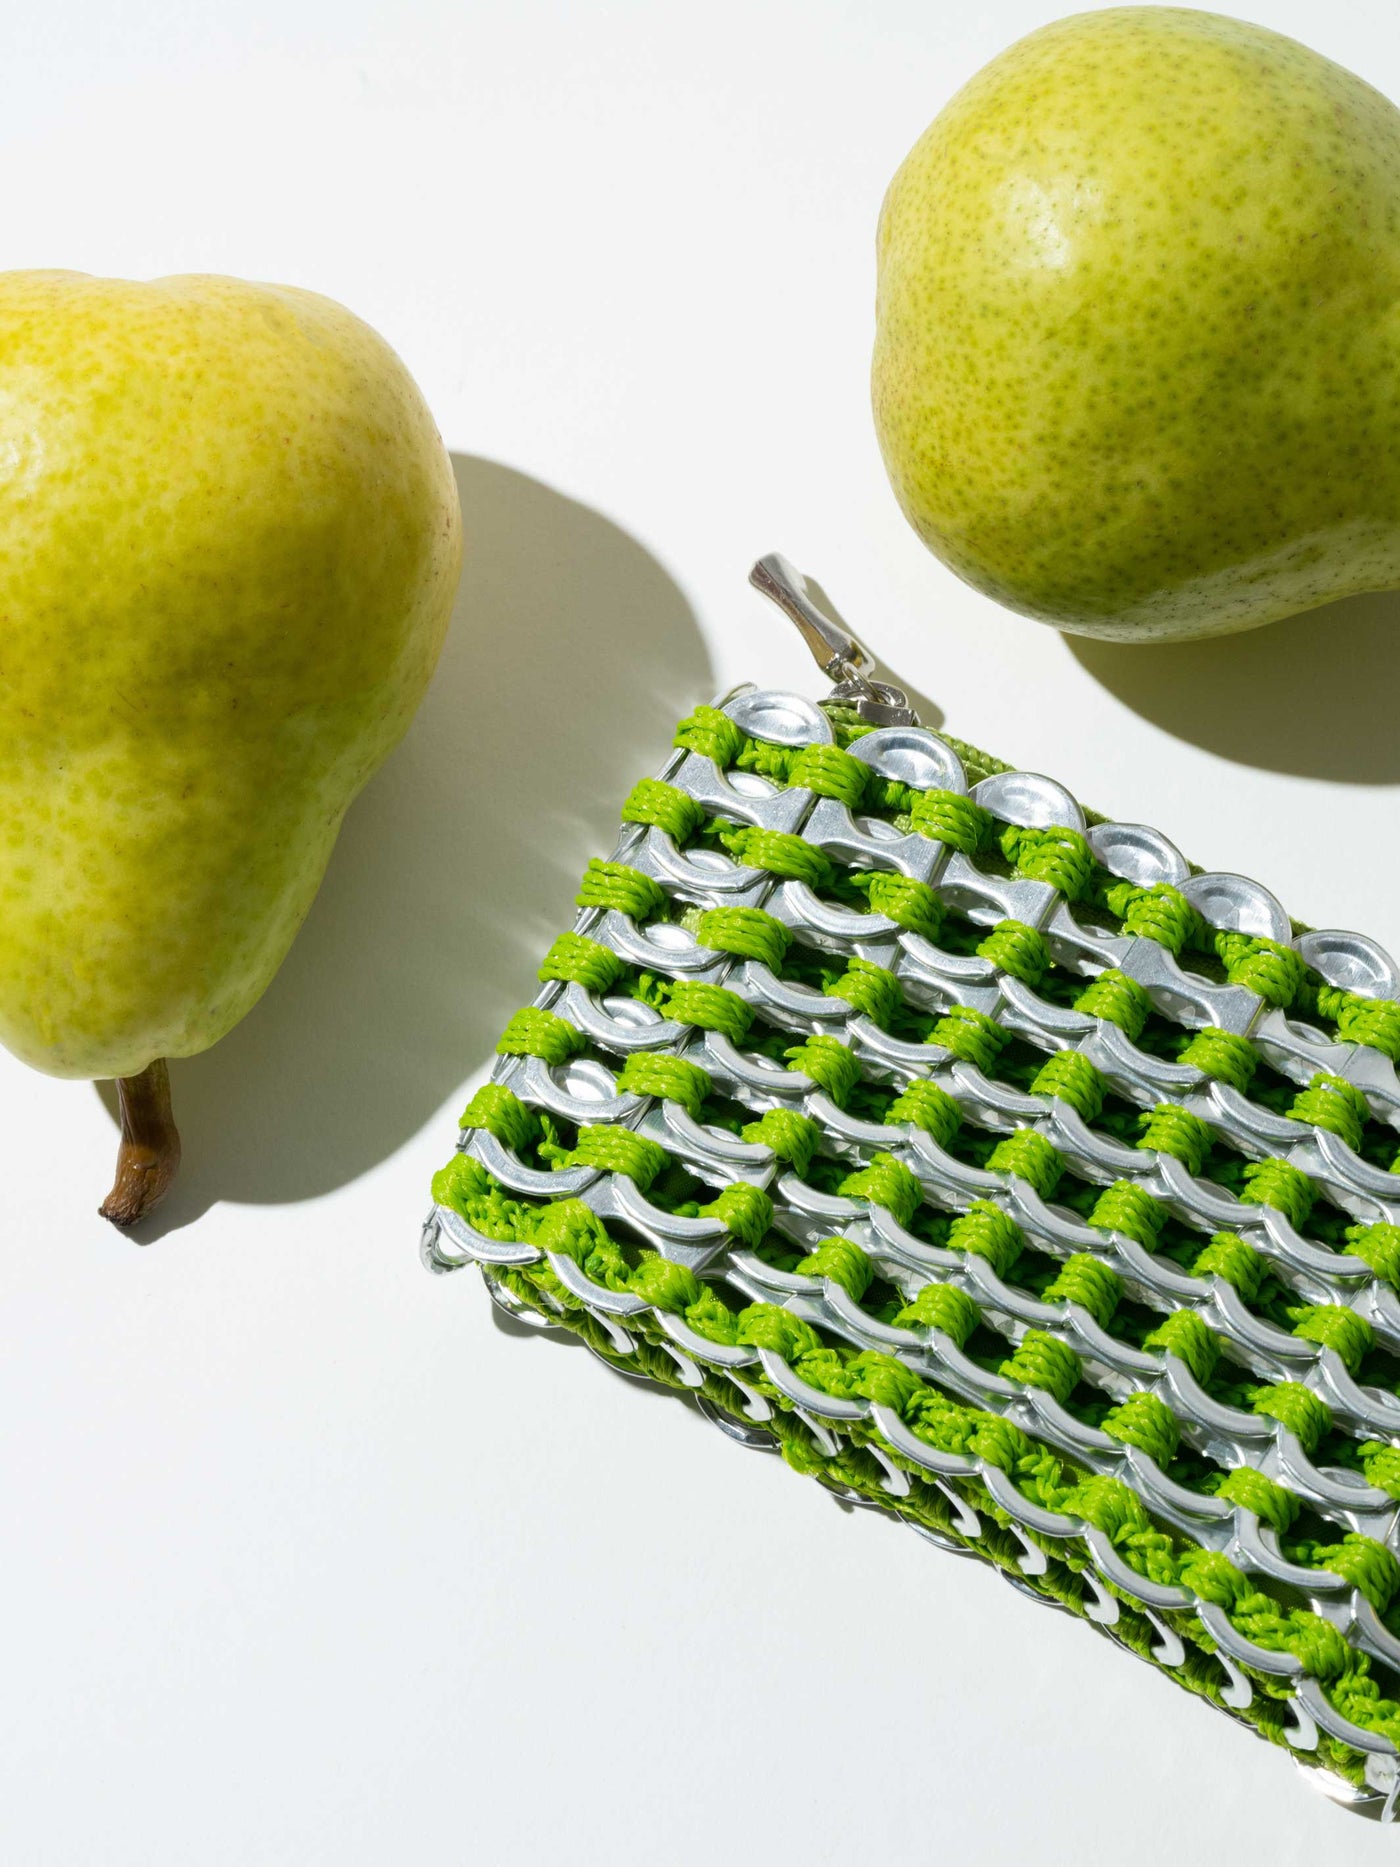 alt="green coin purse with pears - soda tab purse escama studio"